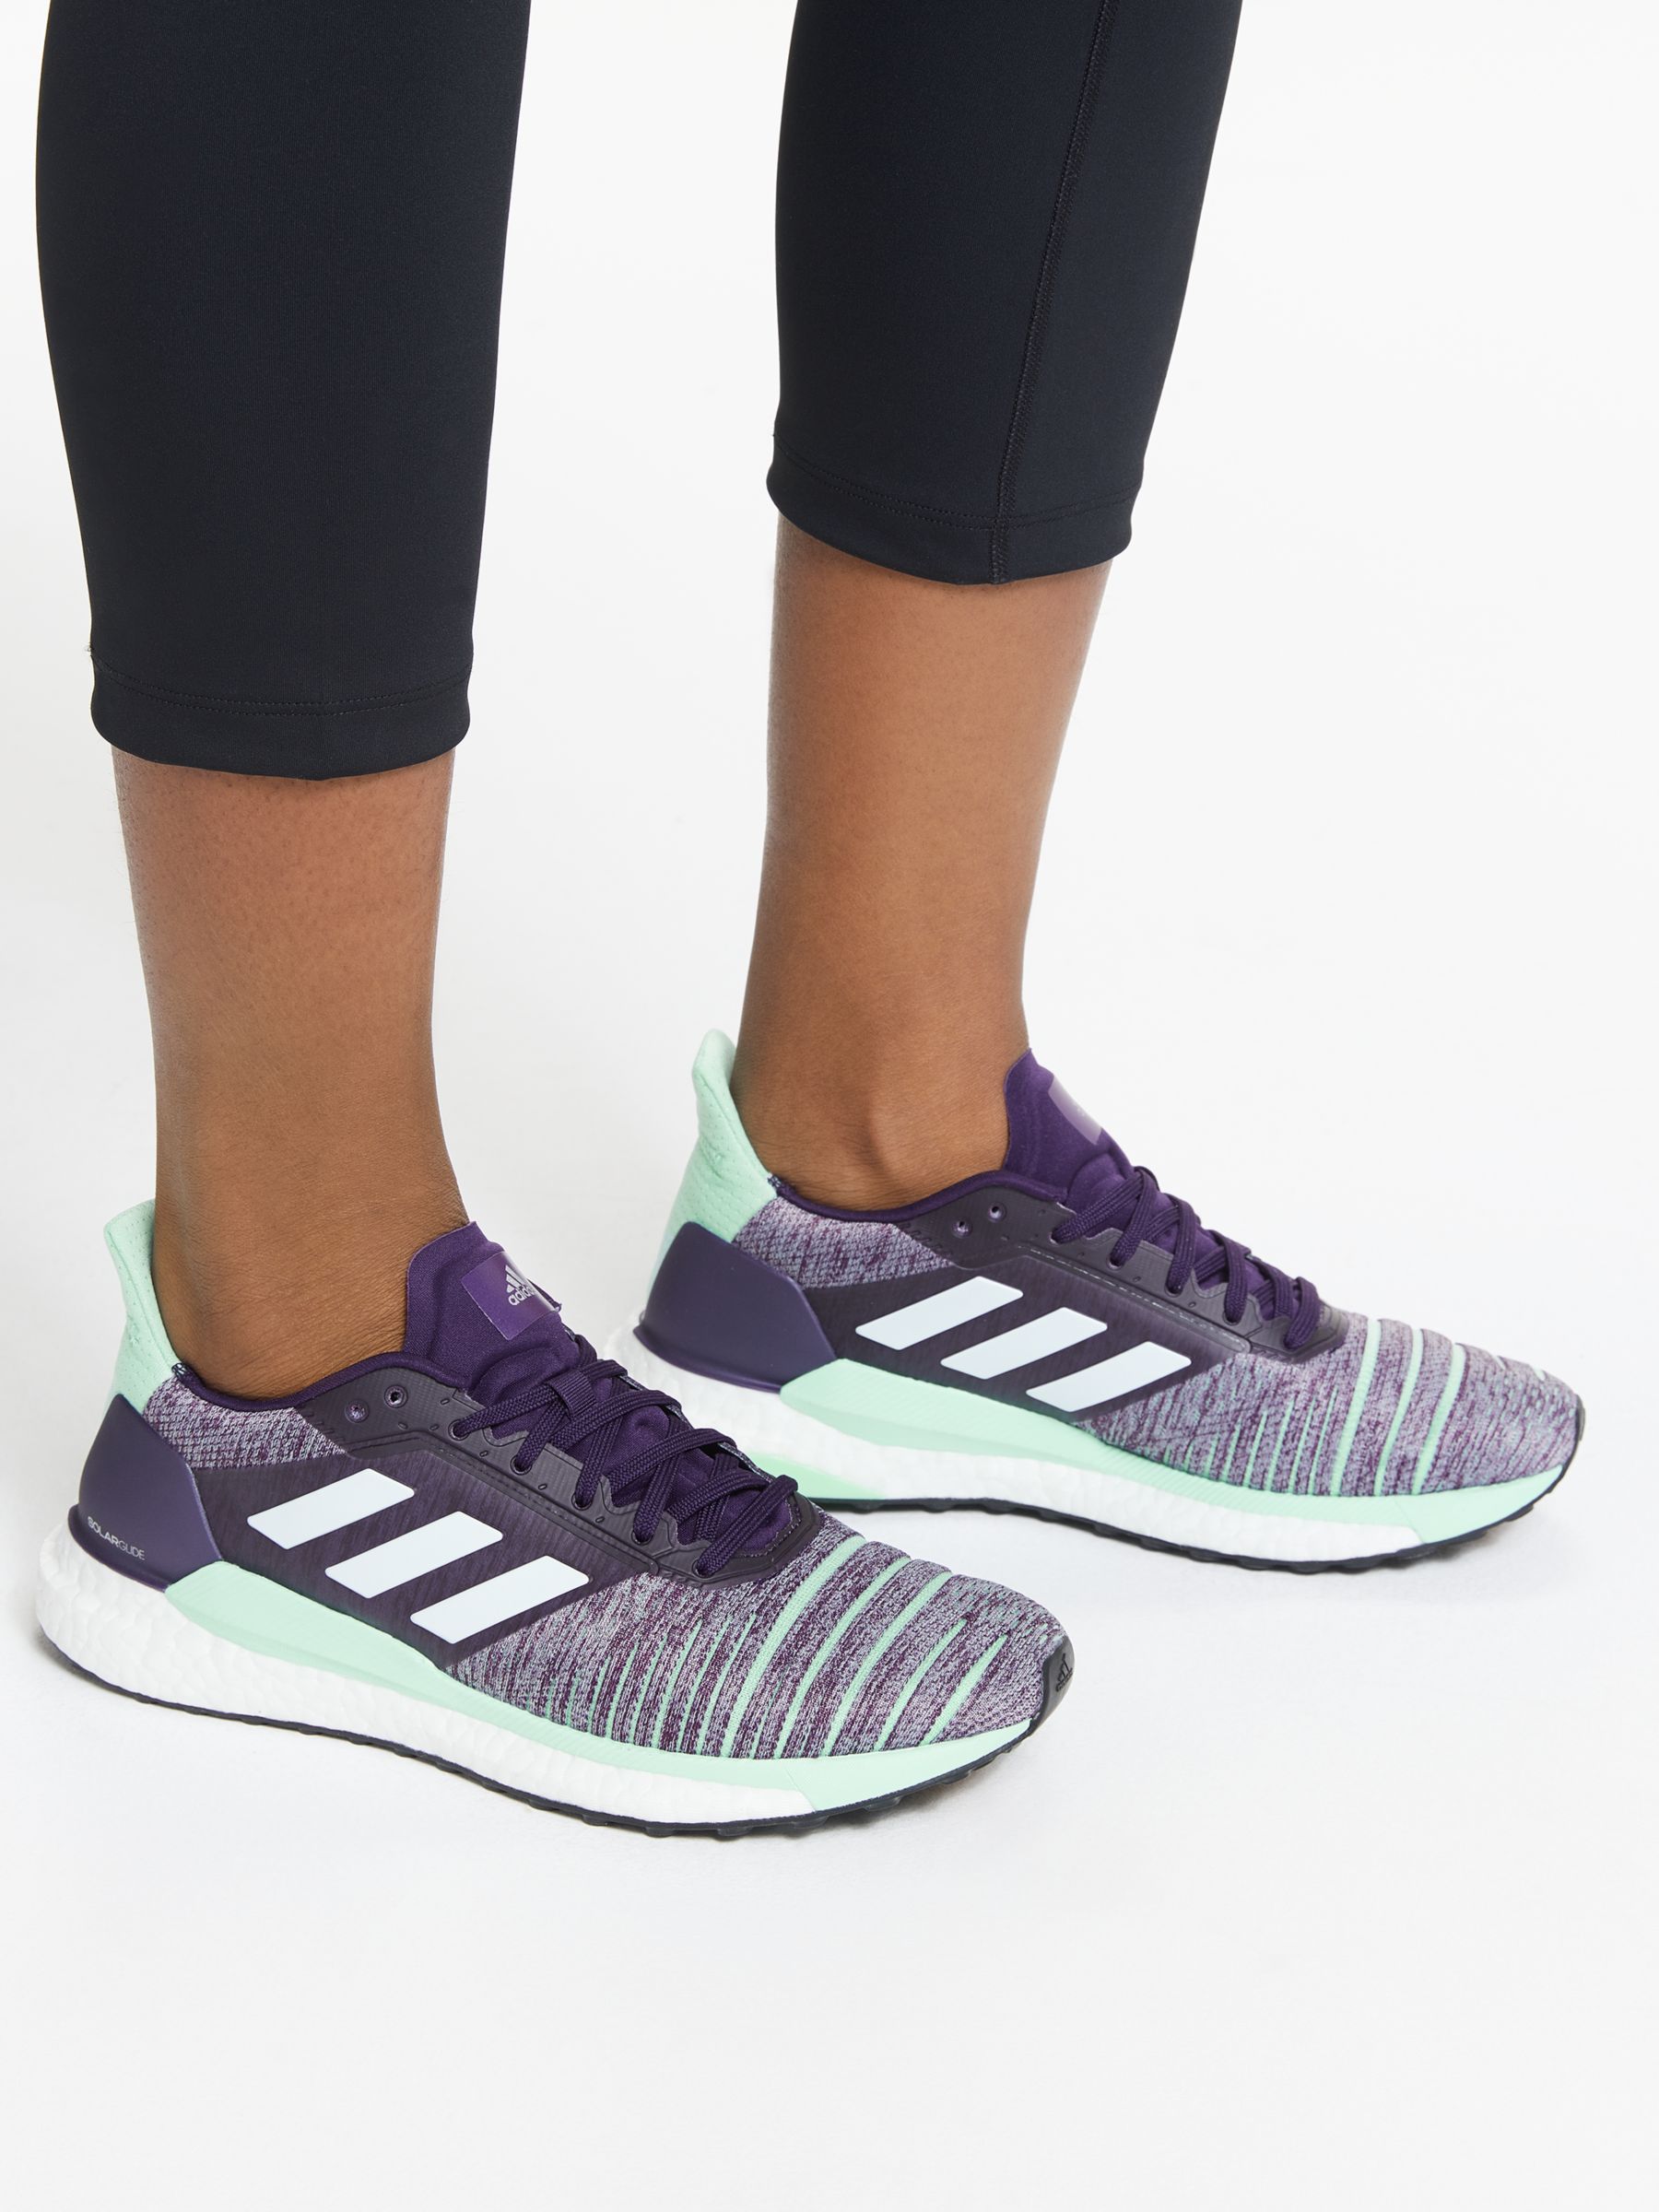 adidas womens running shoes purple